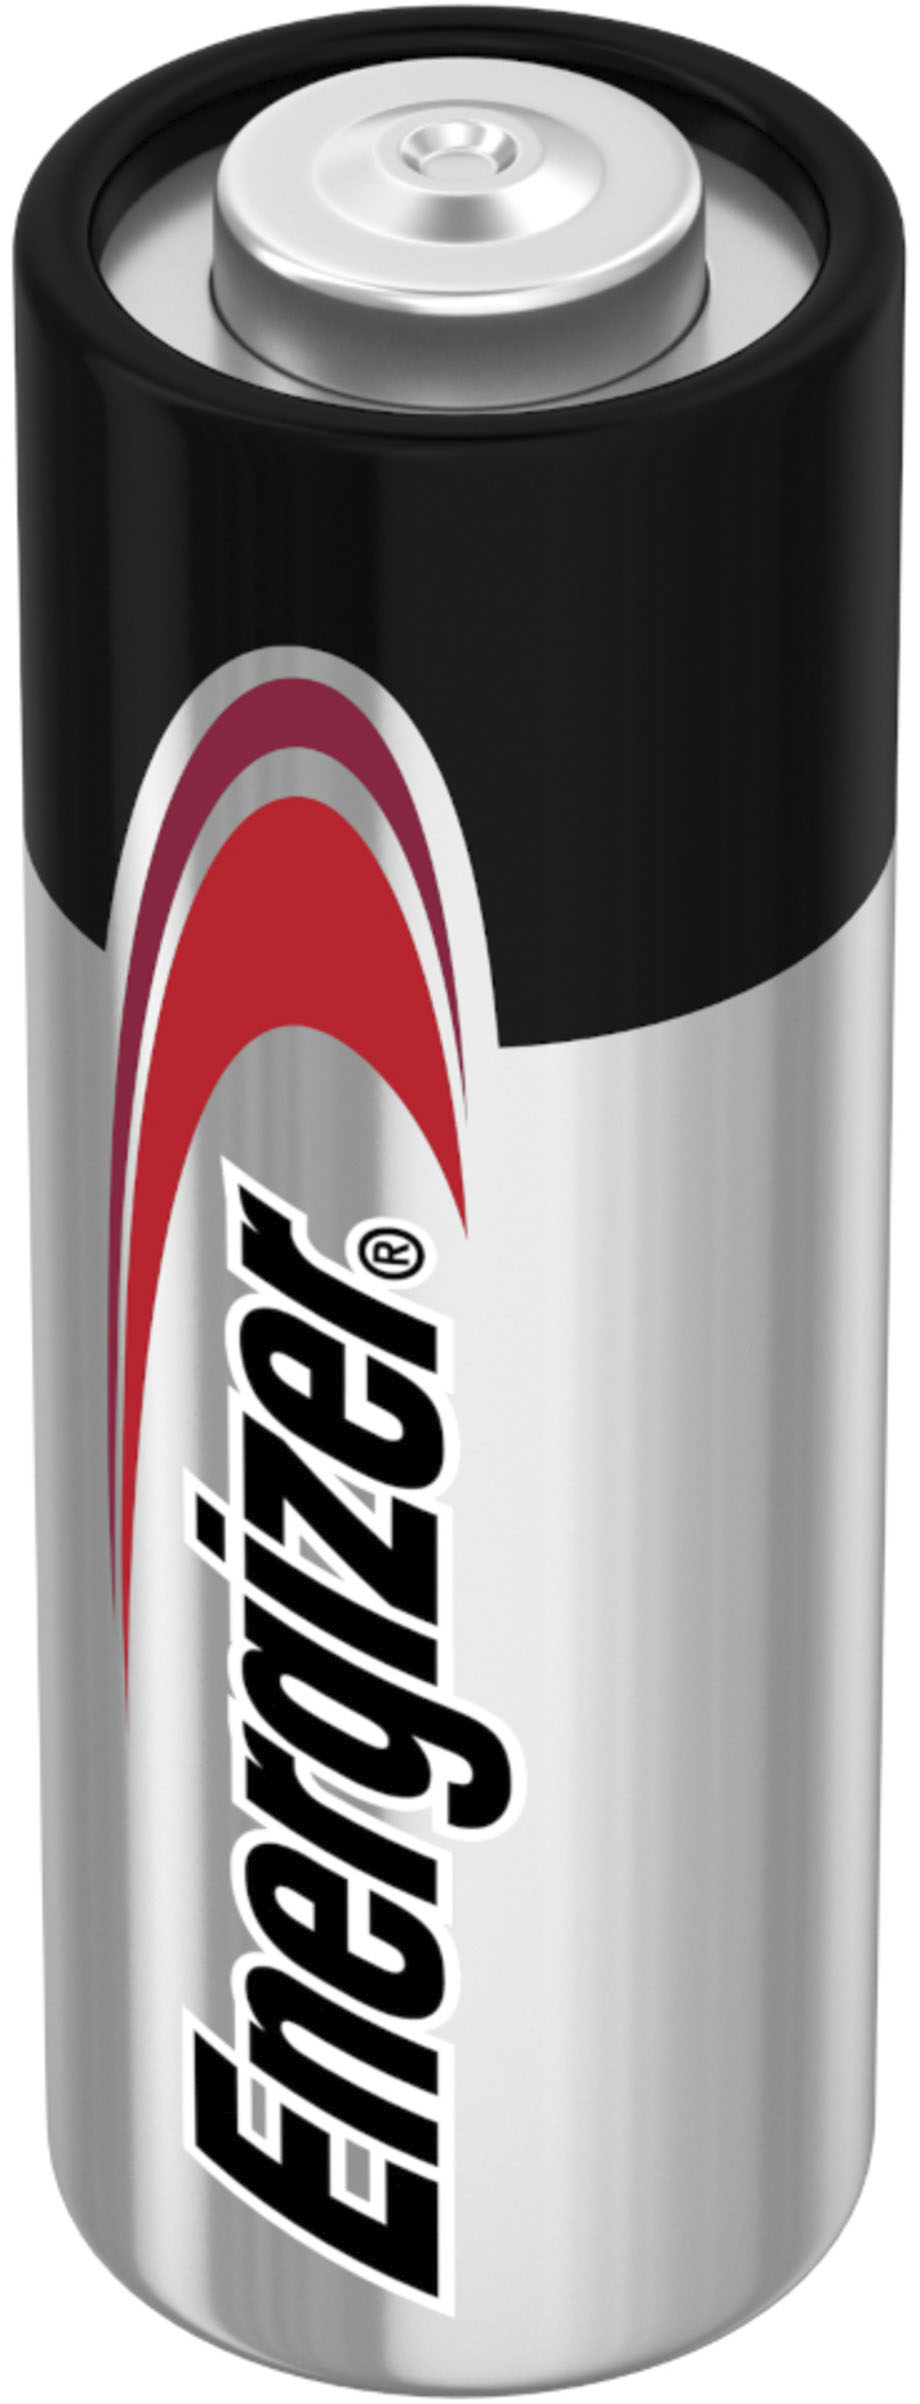 Energizer A23 Batteries - 2 Pack – LED Hut